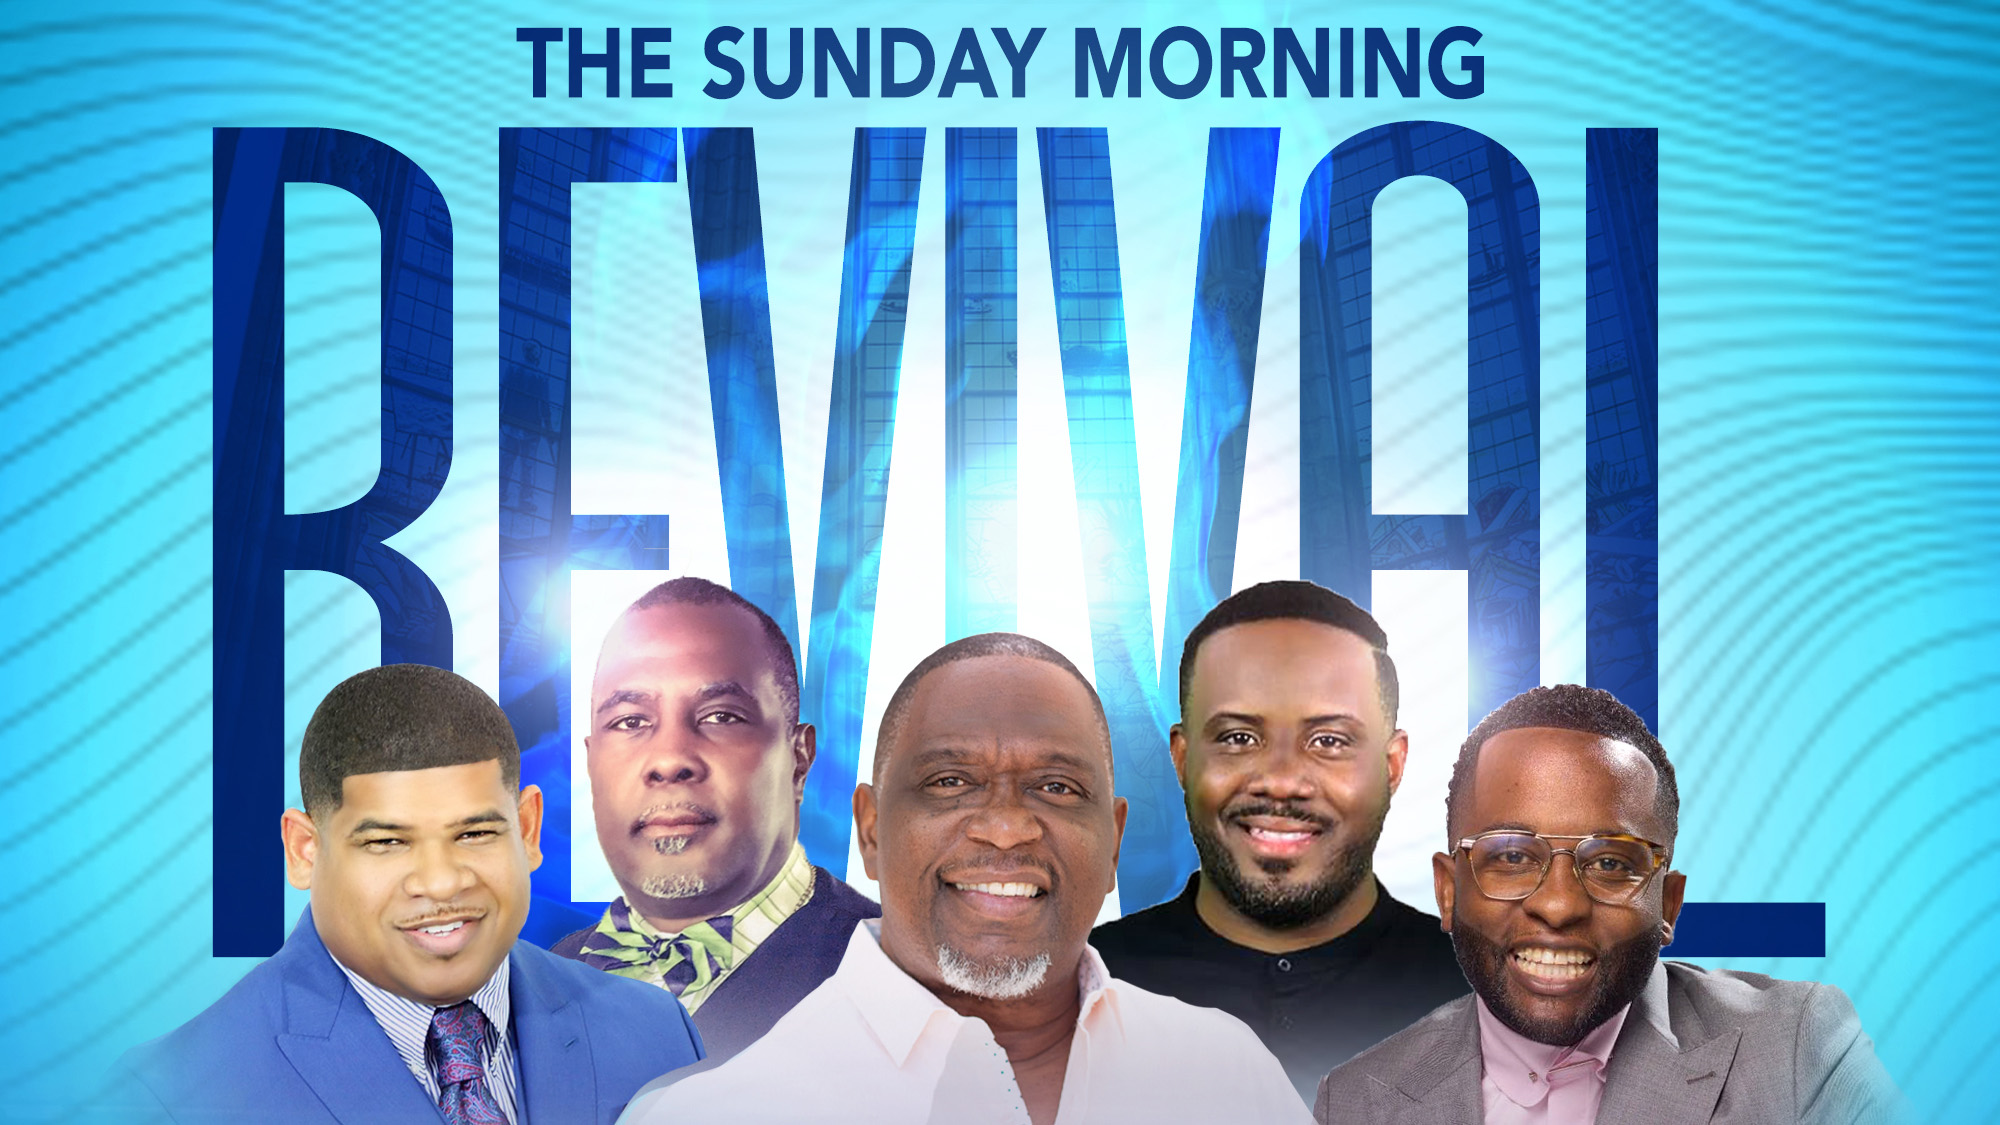 Sunday Morning Revival sermon series